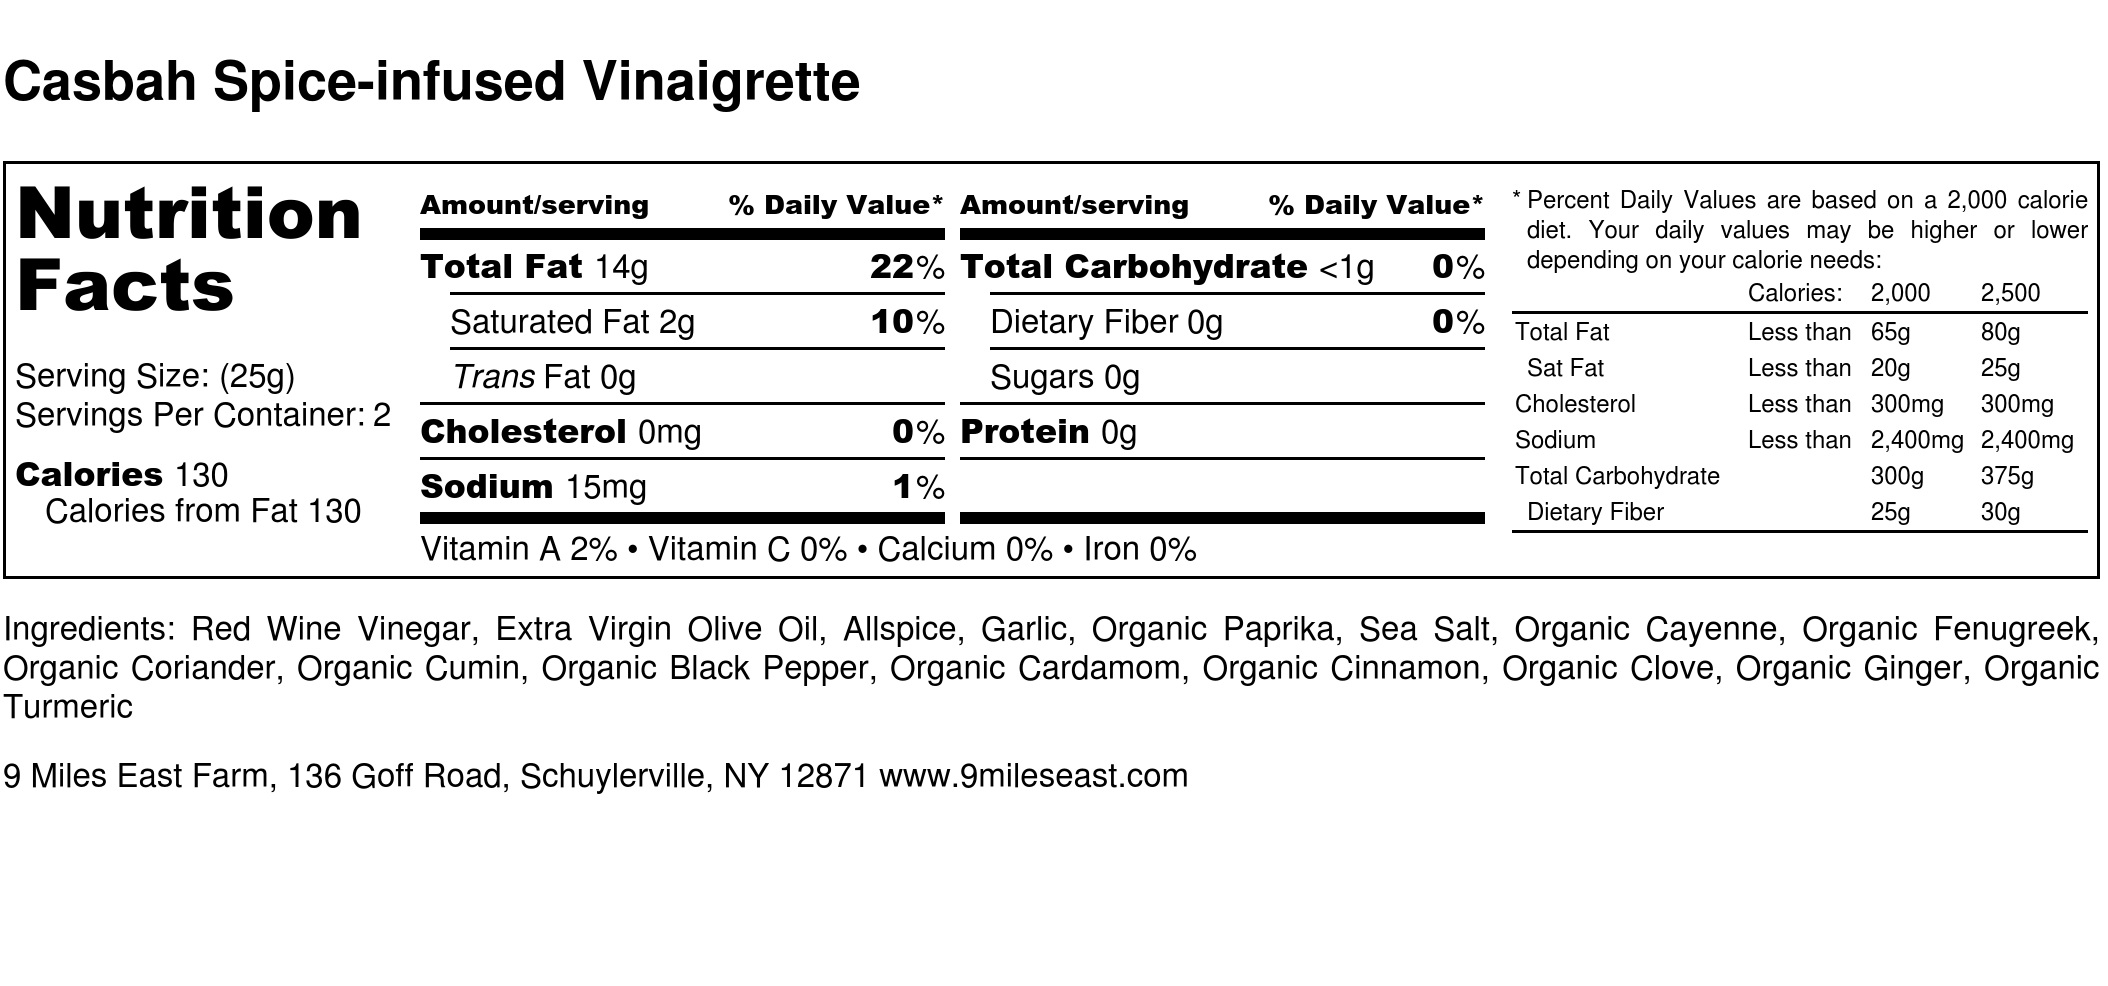 Casbah Spice-infused Vinaigrette - Nutrition Label.jpg